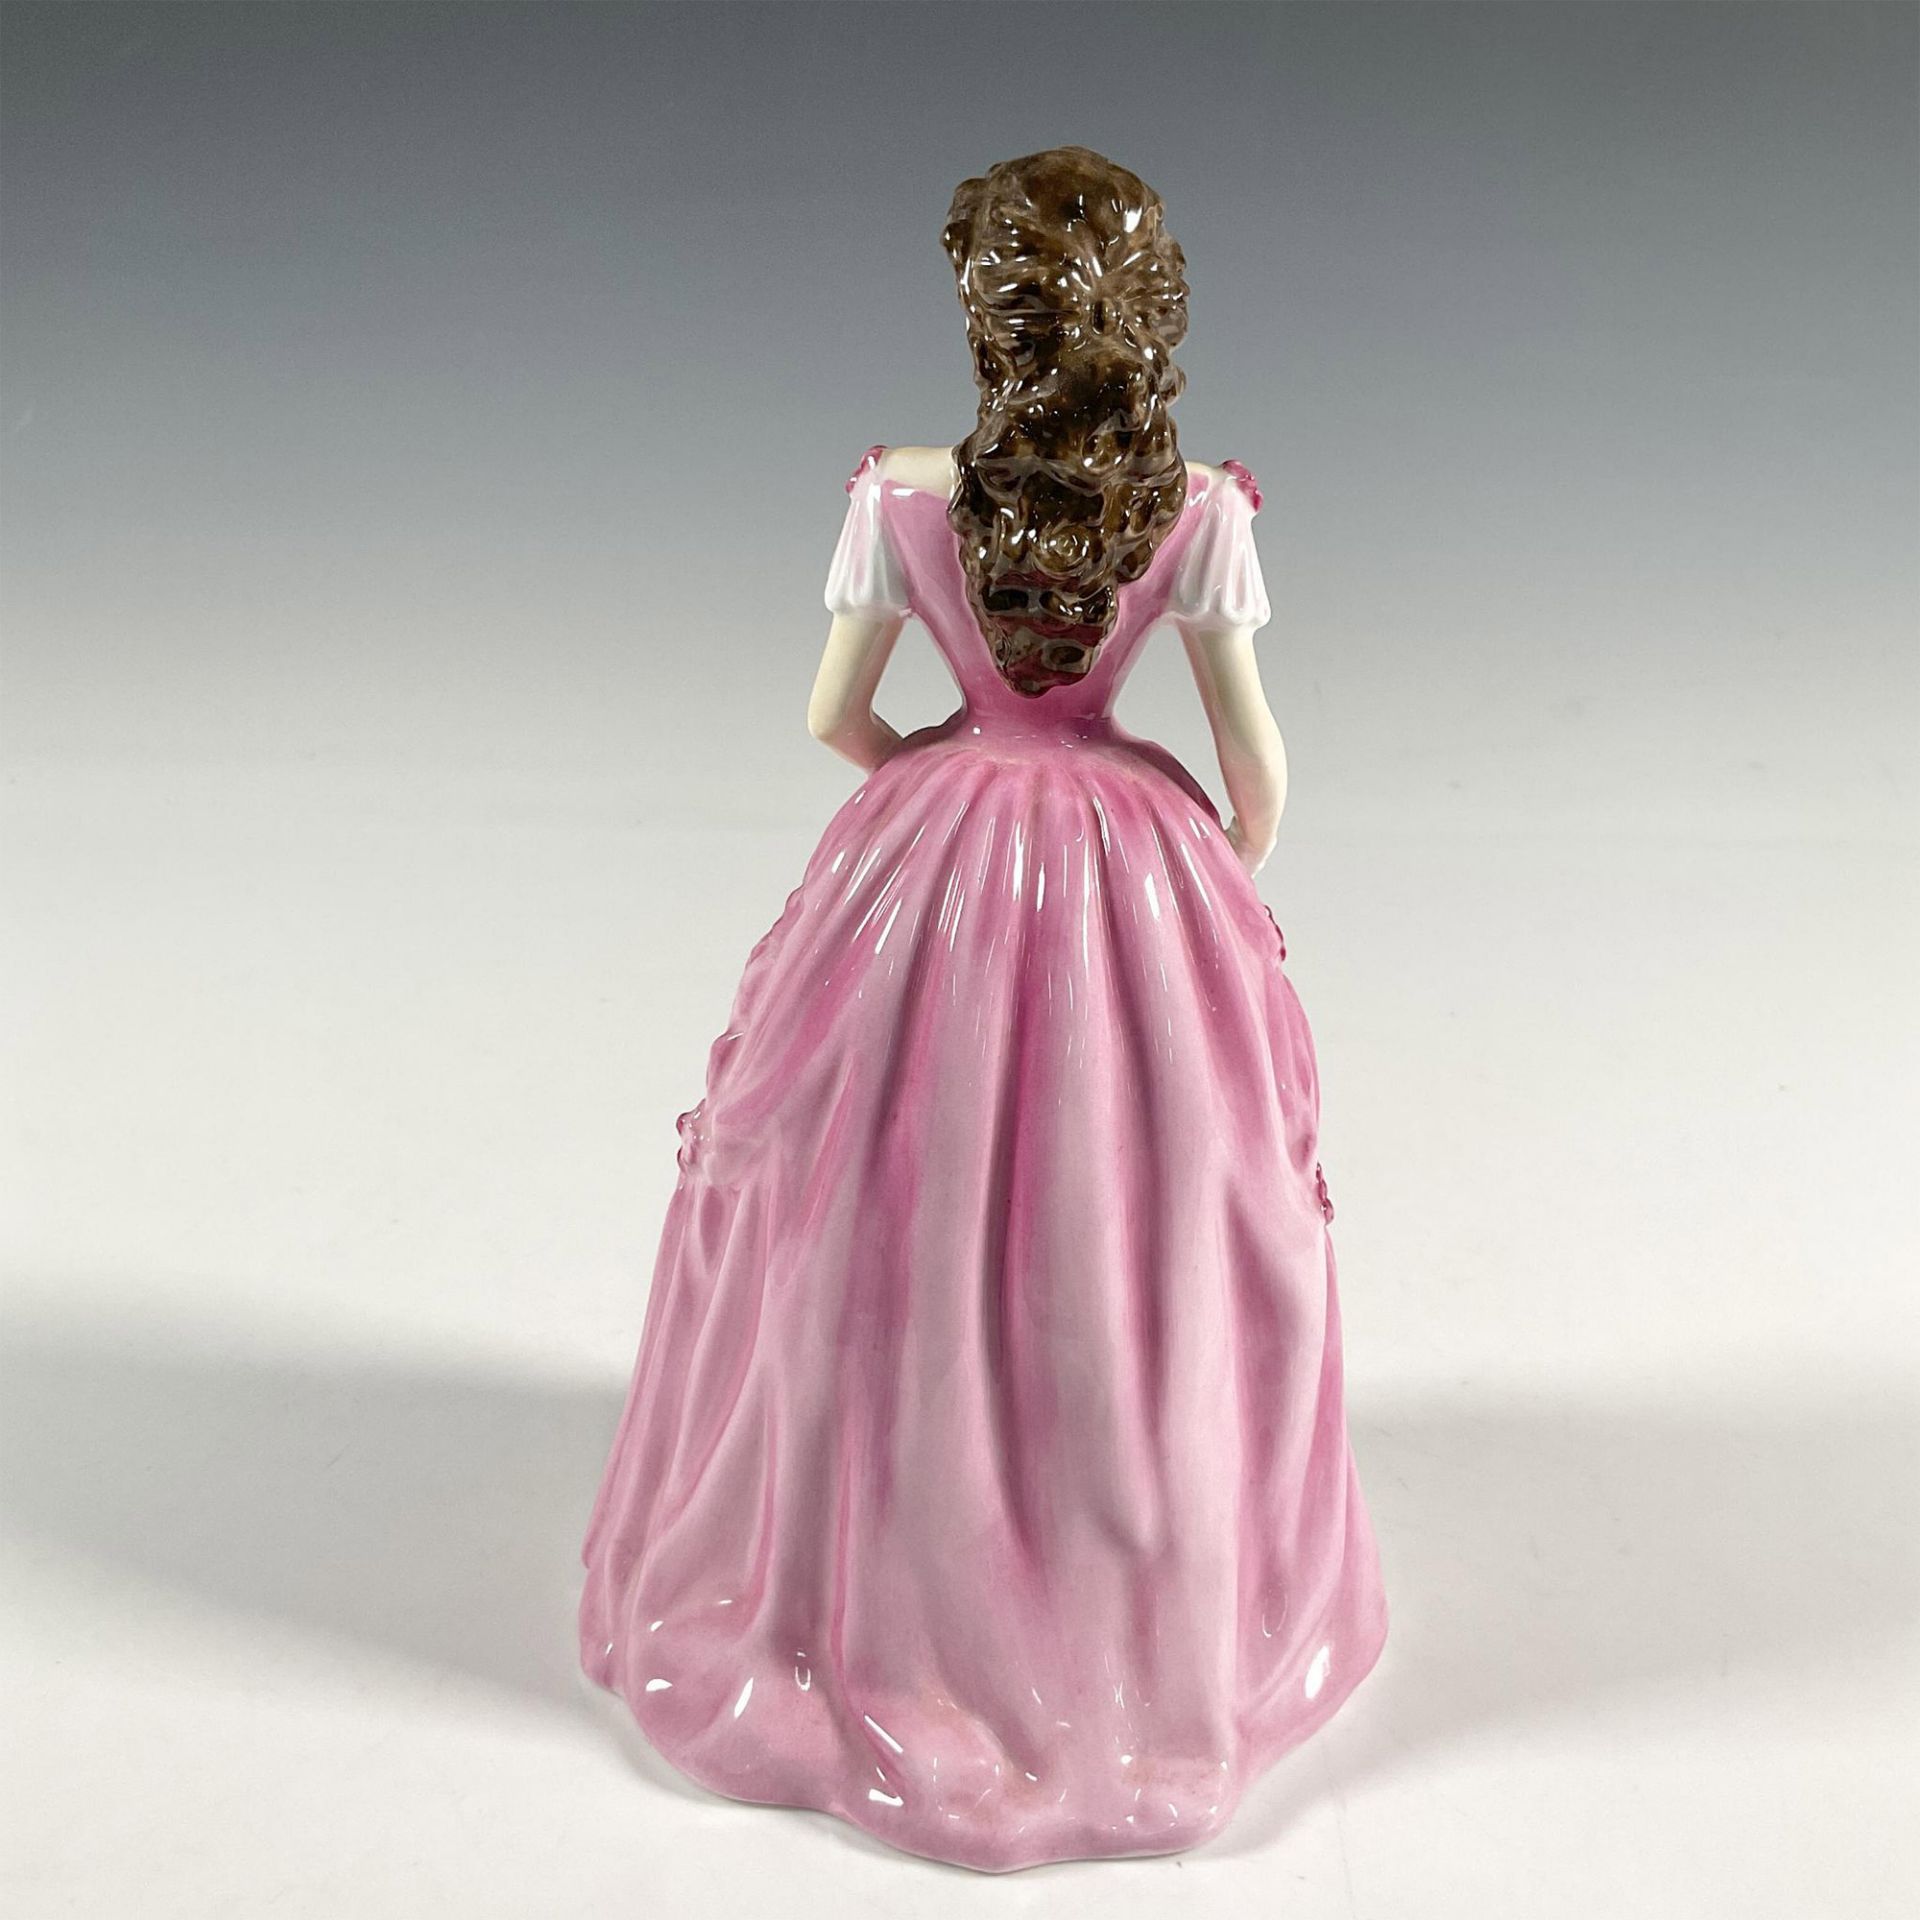 Lynne HN4155 - Royal Doulton Figurine - Image 2 of 3